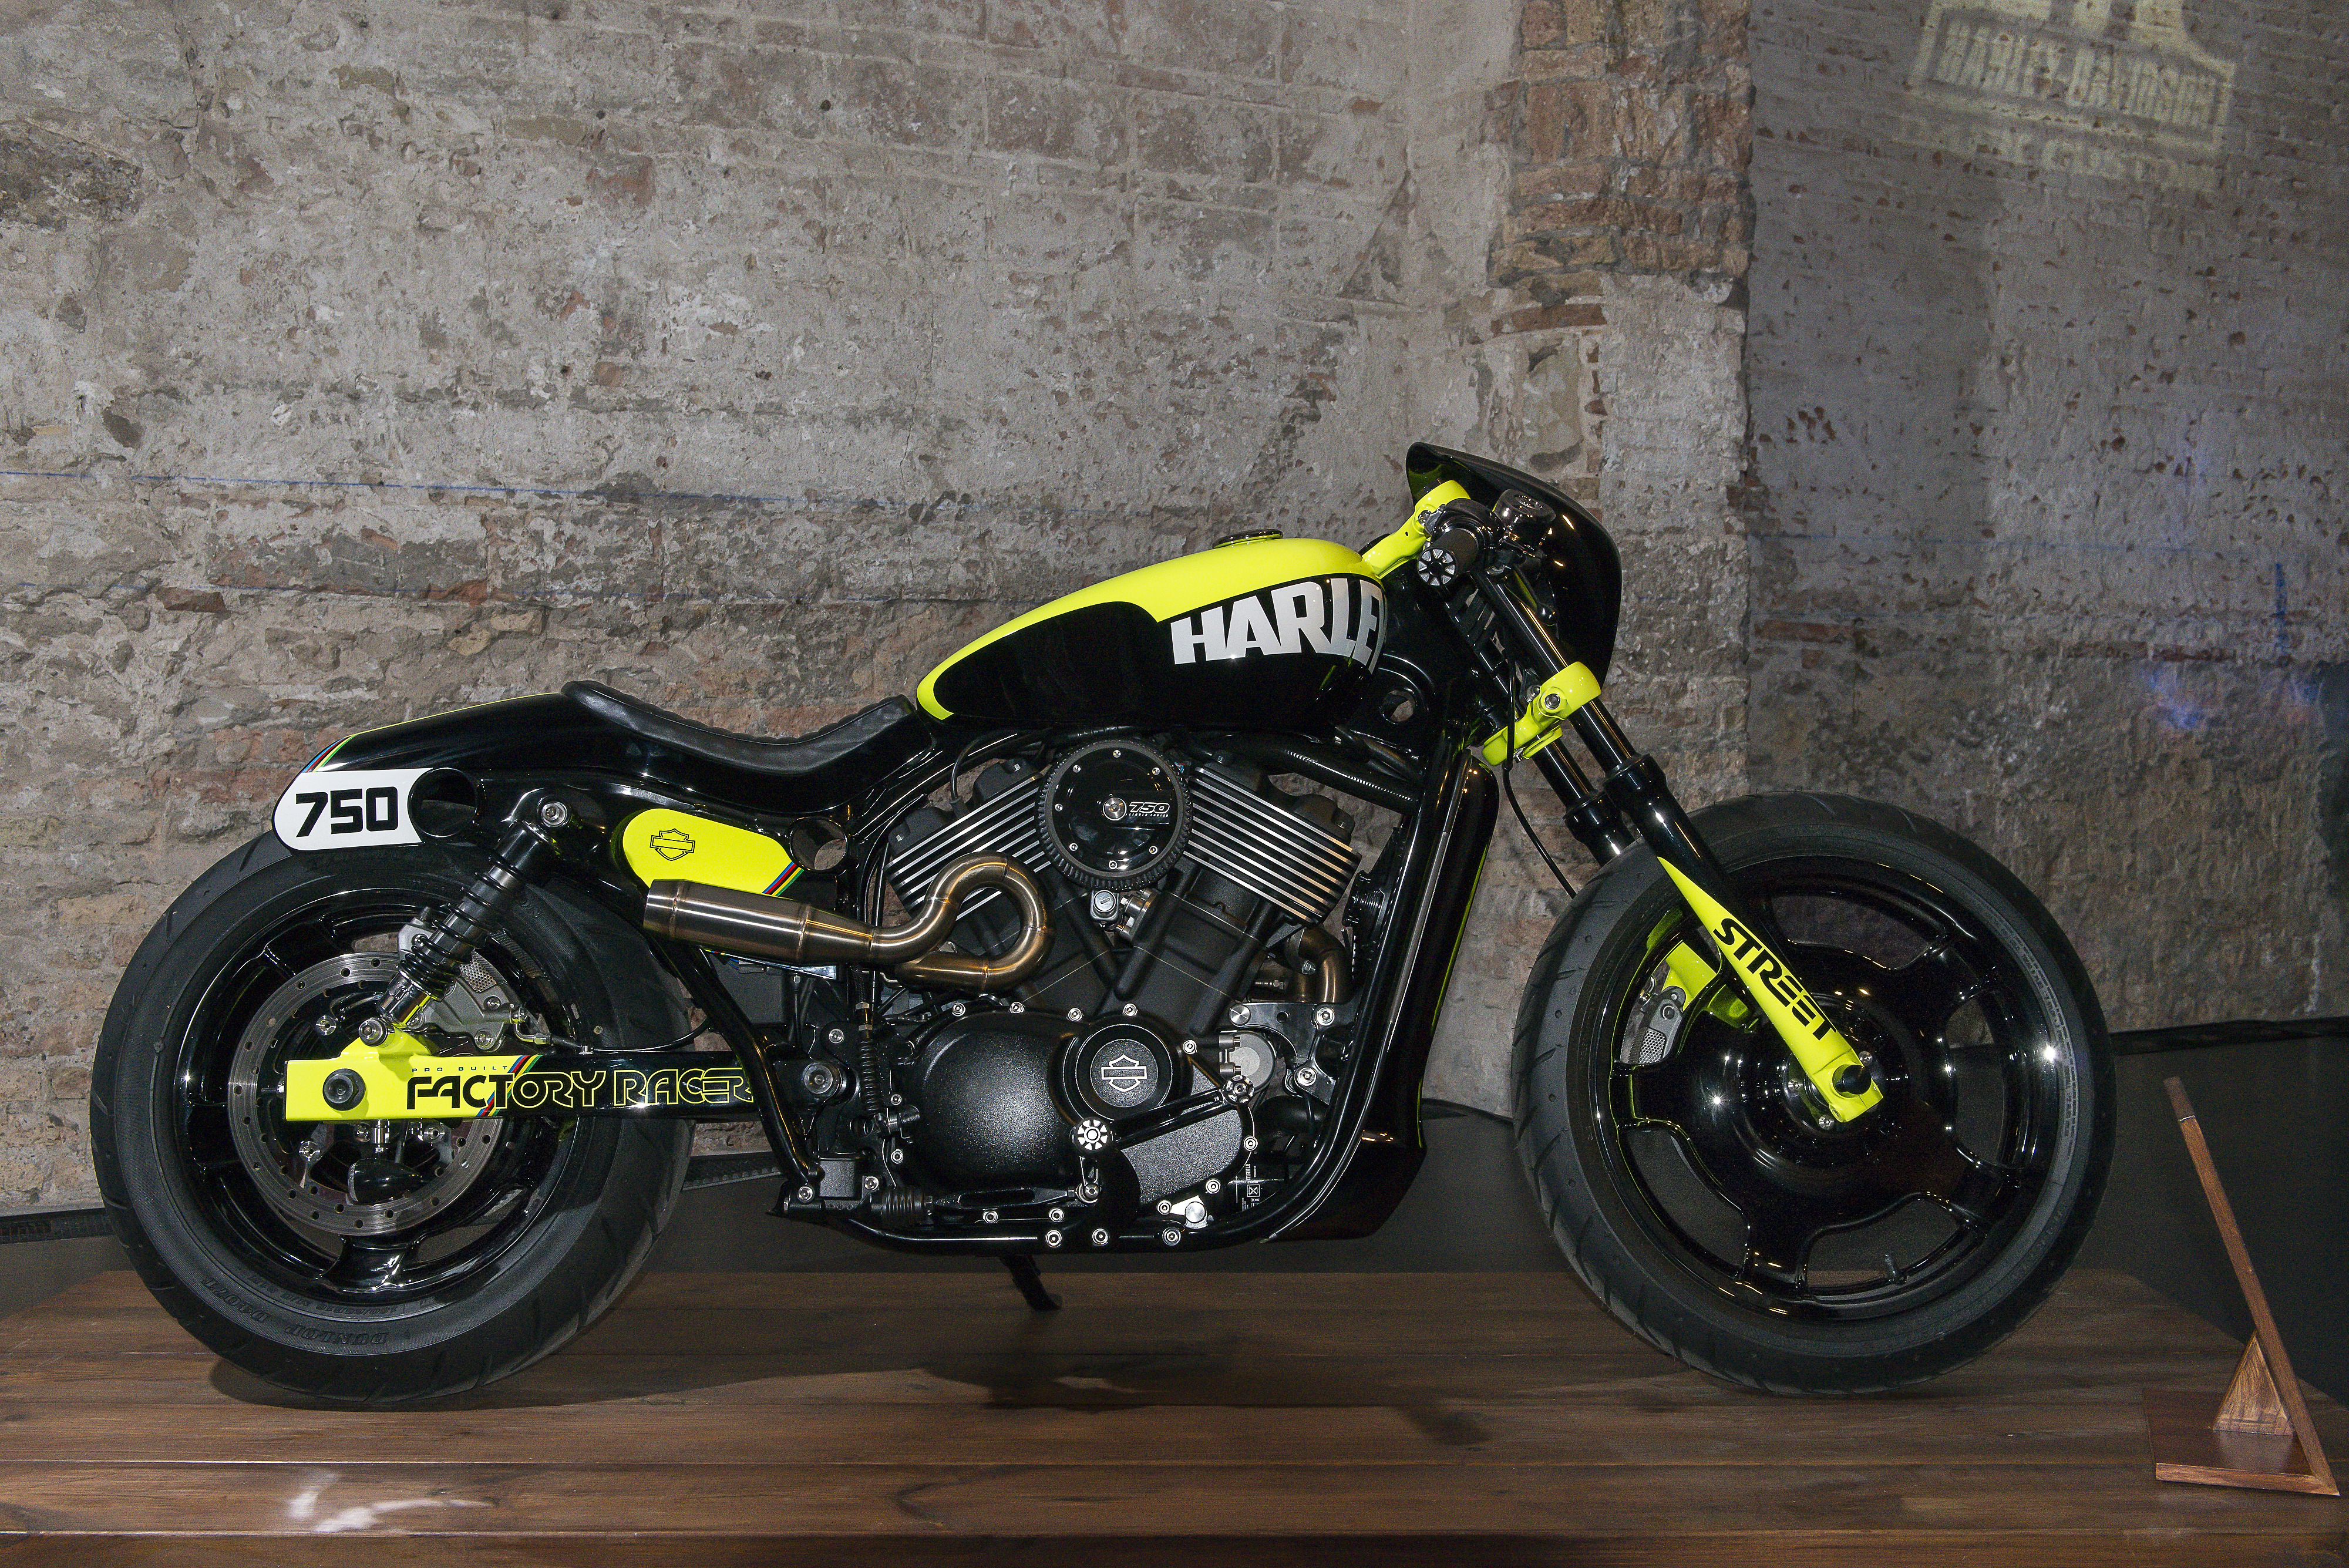 Harley’s Street 750 scrambler custom